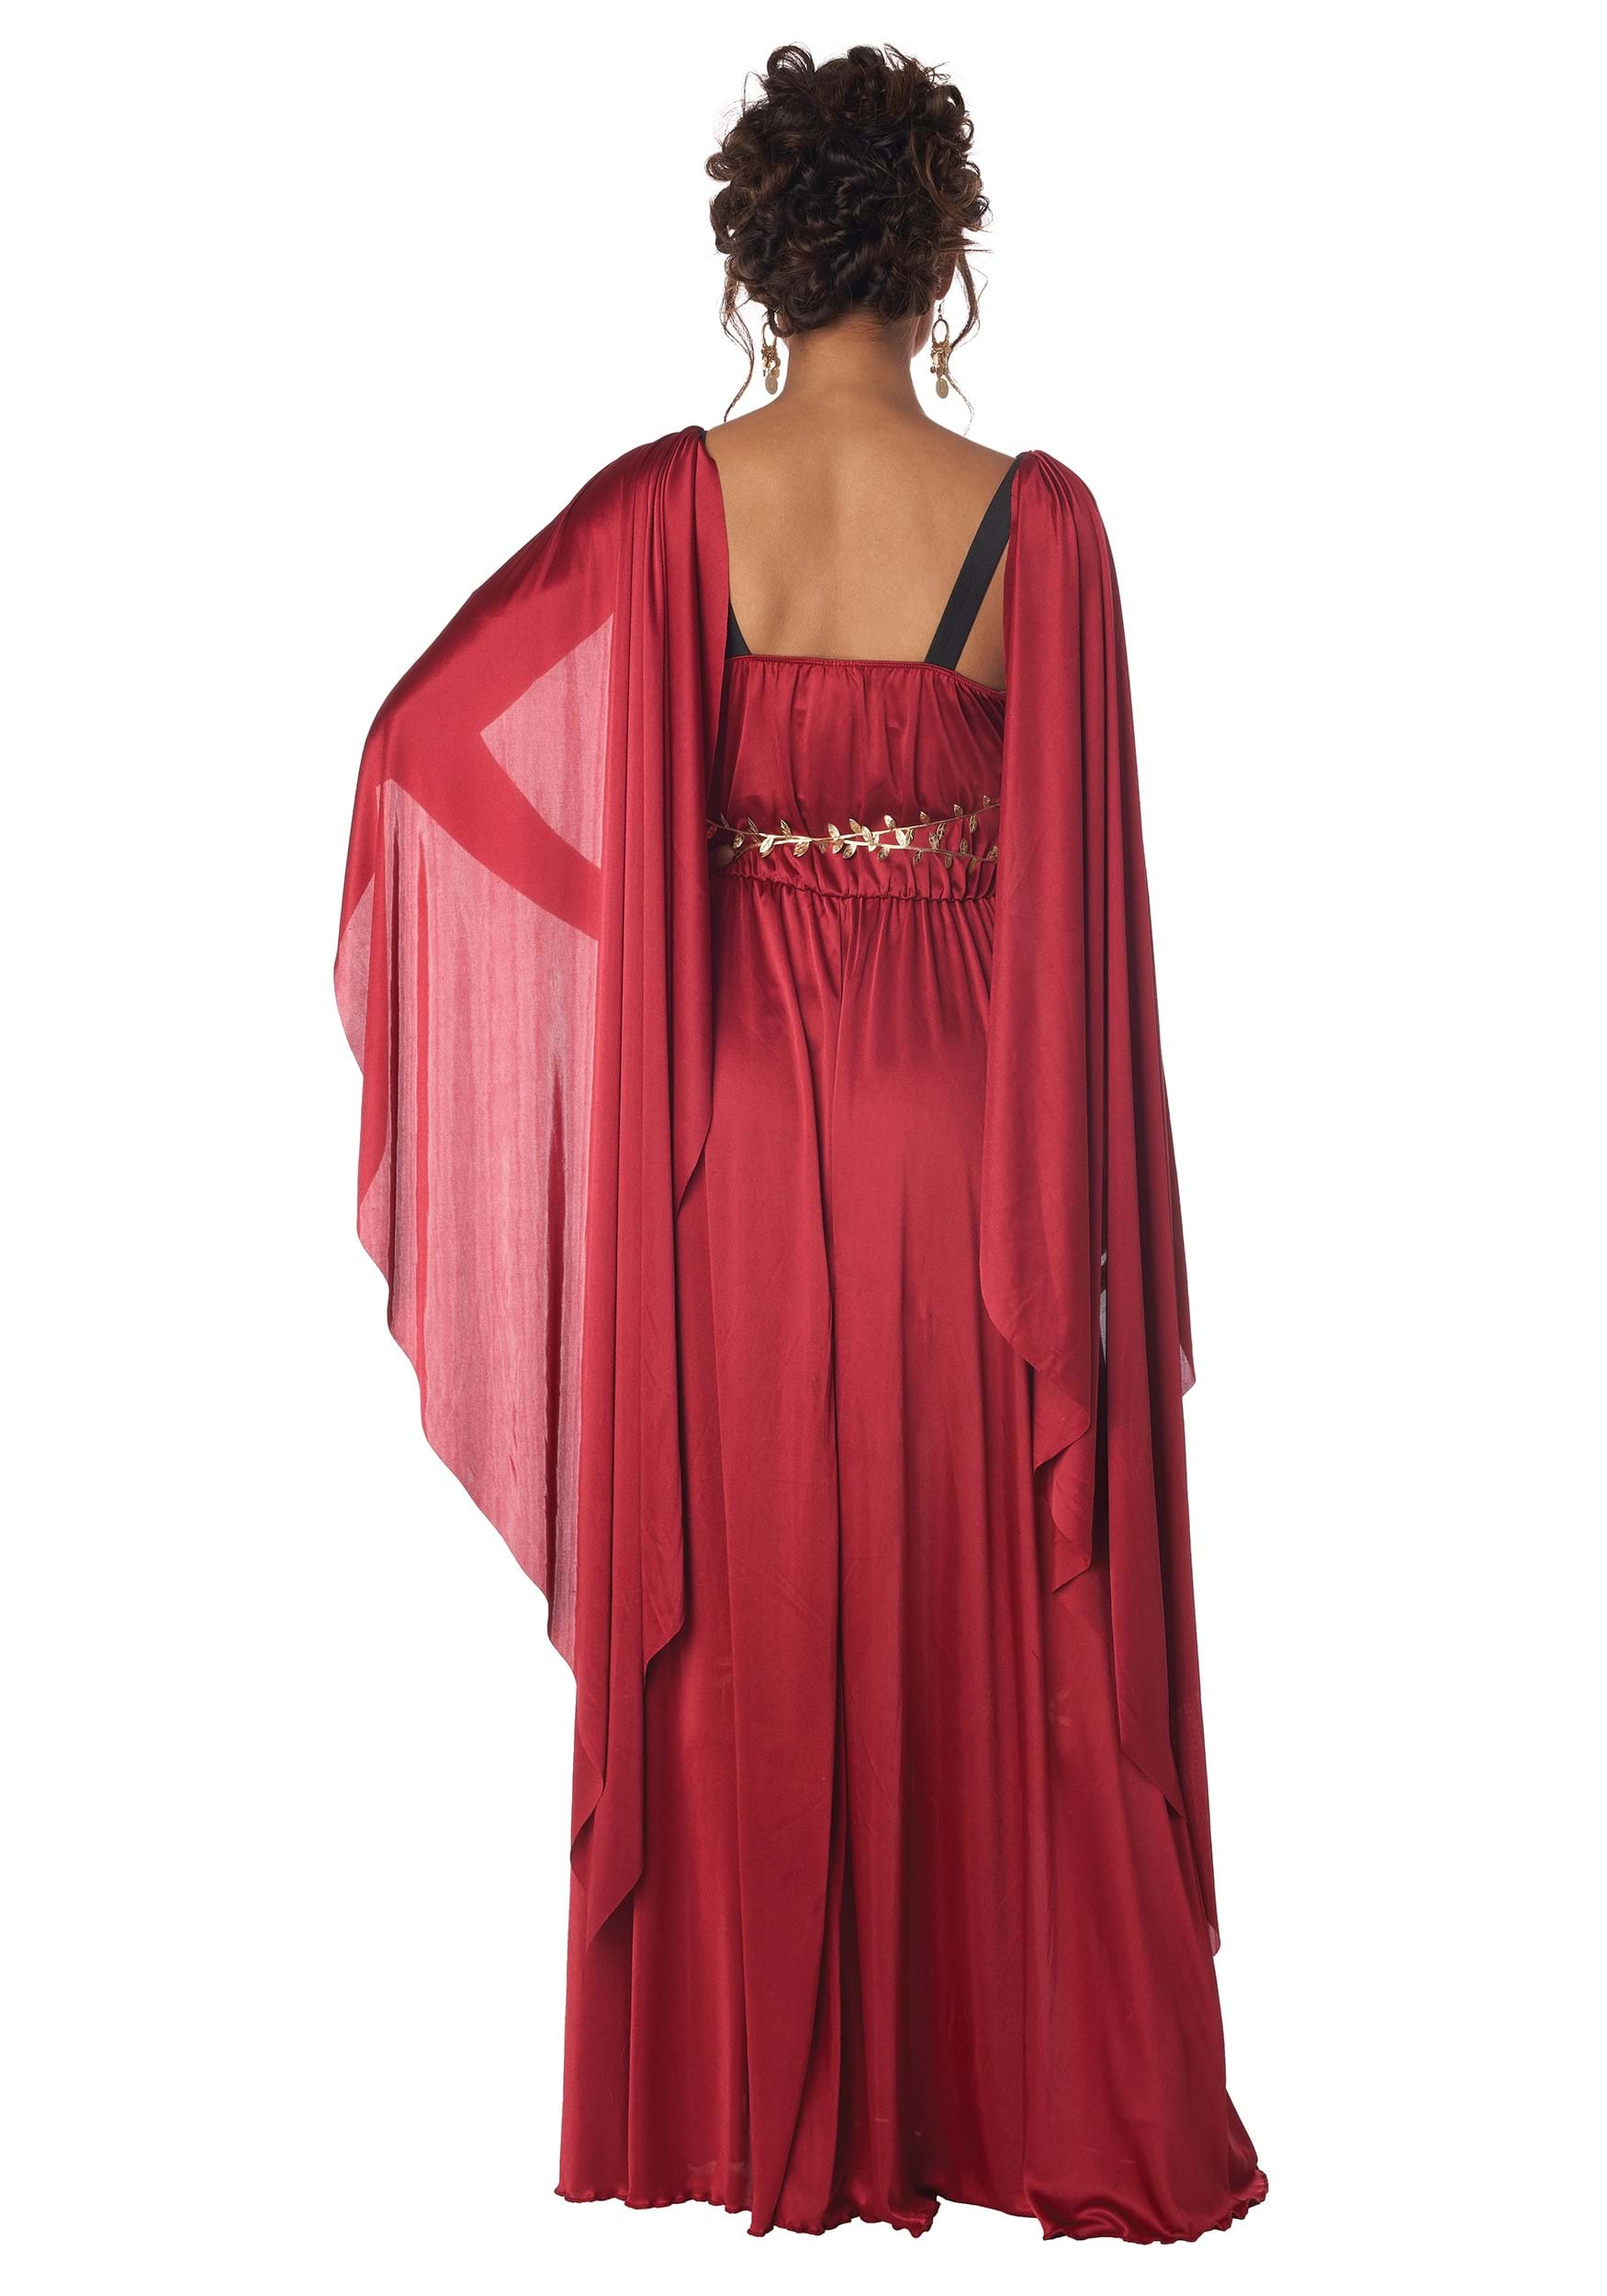 Red Roman Goddess Women's Costume